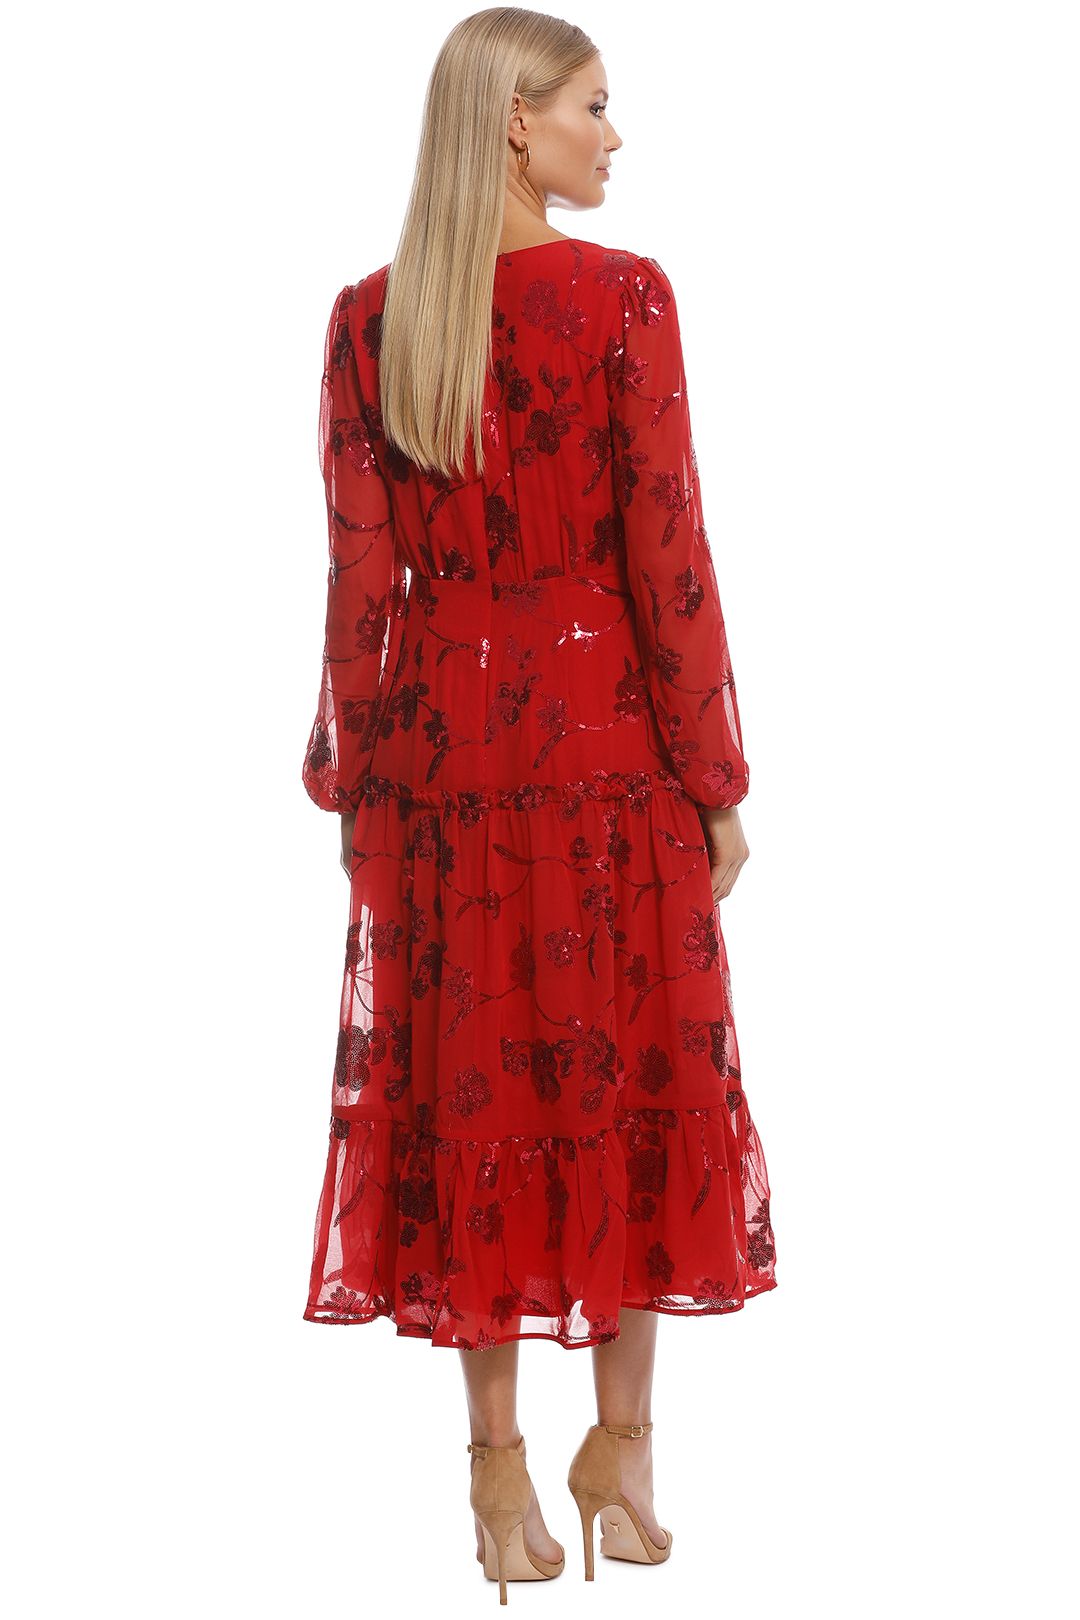 Talulah - Valiant Midi Dress - Red - Back